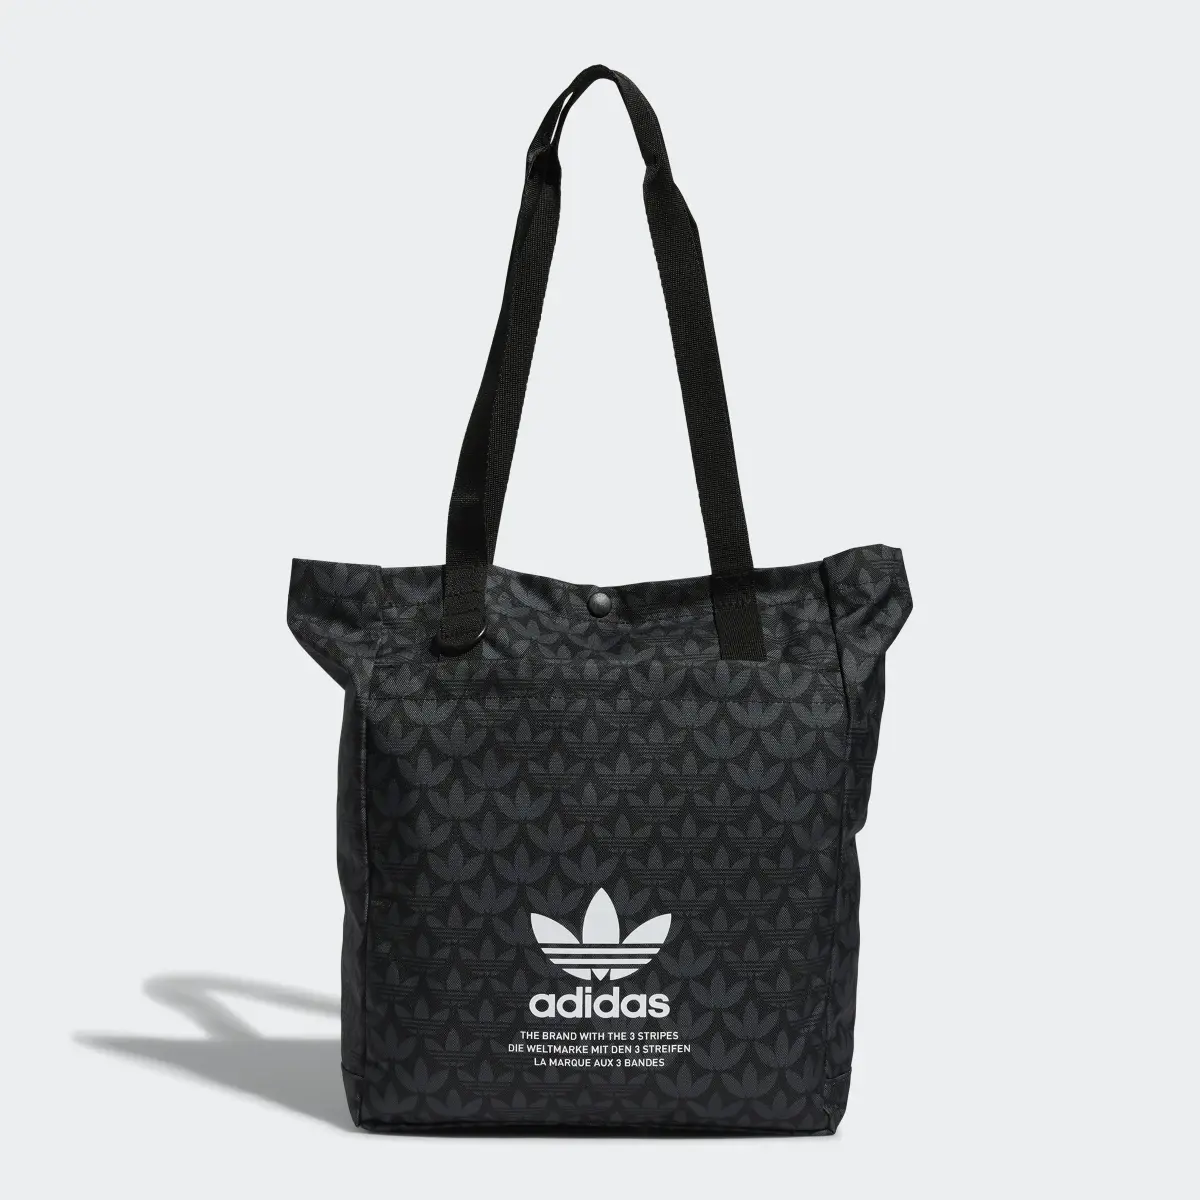 Adidas Simple Tote Bag. 2